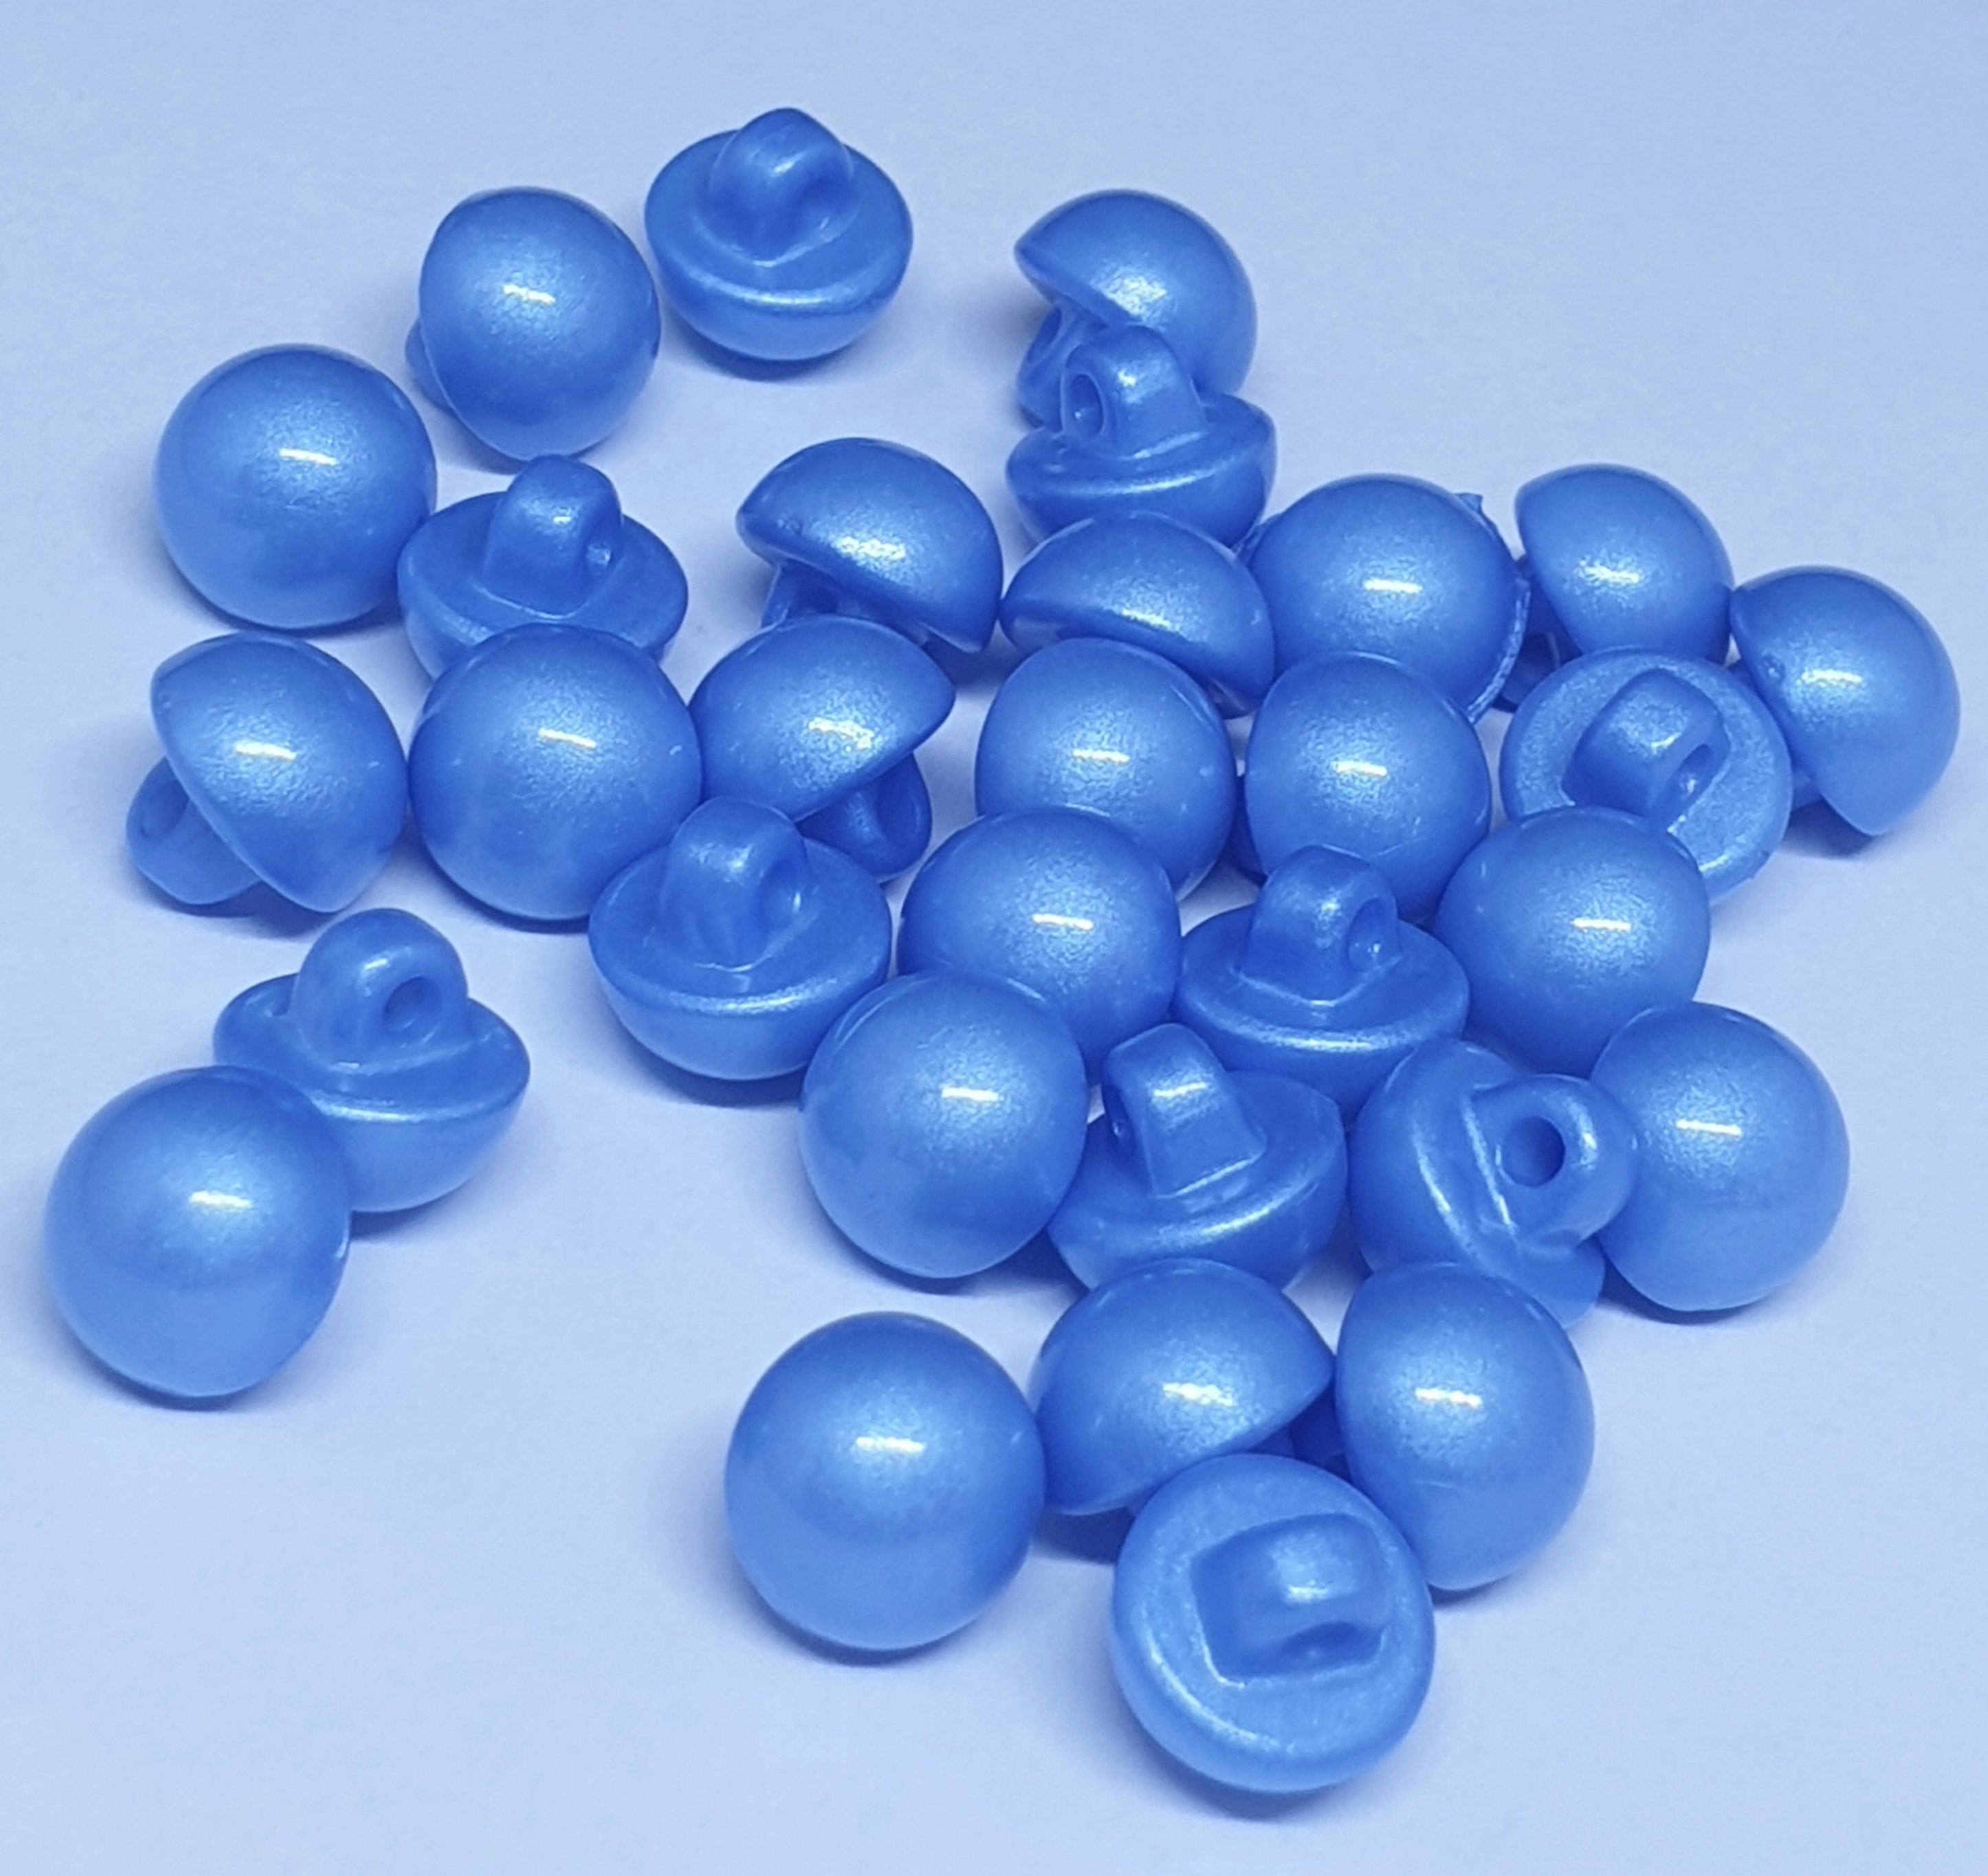 MajorCrafts 30pcs 10mm Light Blue High-Grade Acrylic Small Round Sewing Mushroom Shank Buttons